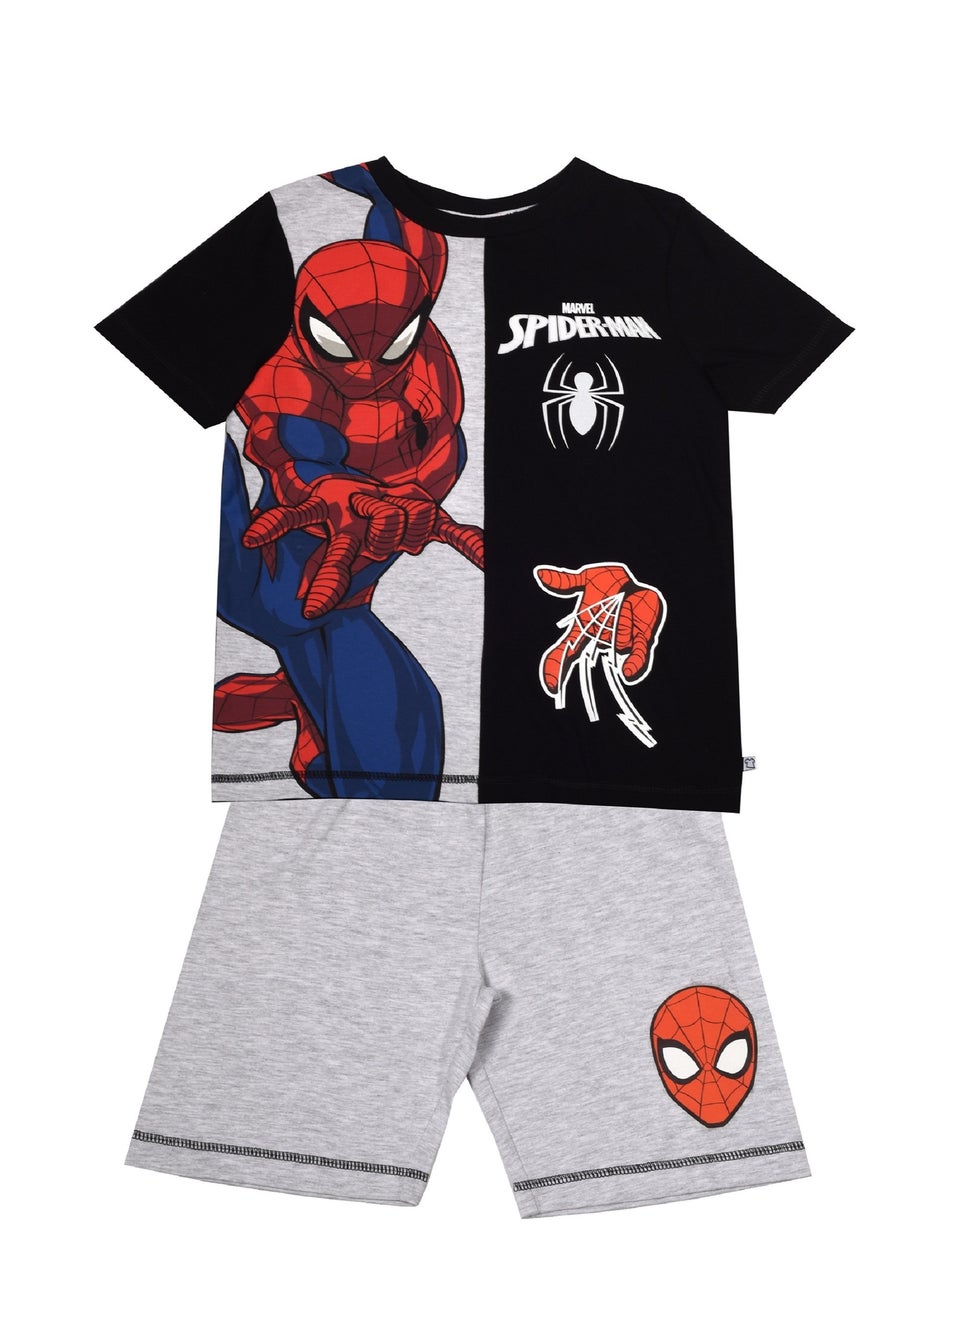 Marvel Boys Black Spiderman Pjyama Set (4-8 yrs)